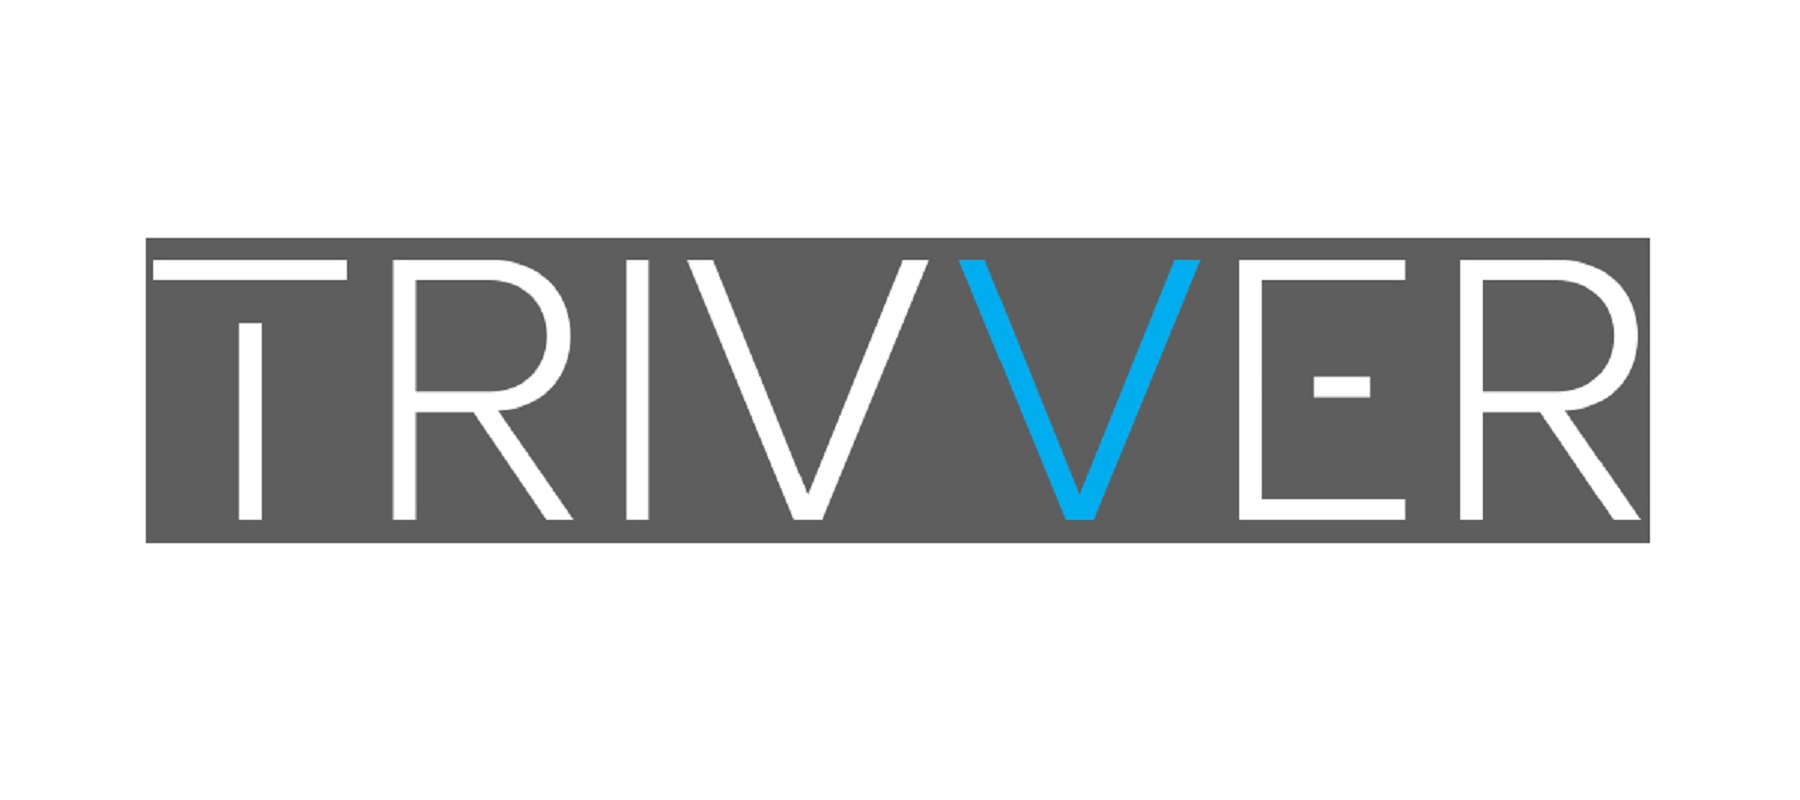 Trivver announces 73 international patents that will advance digital advertising